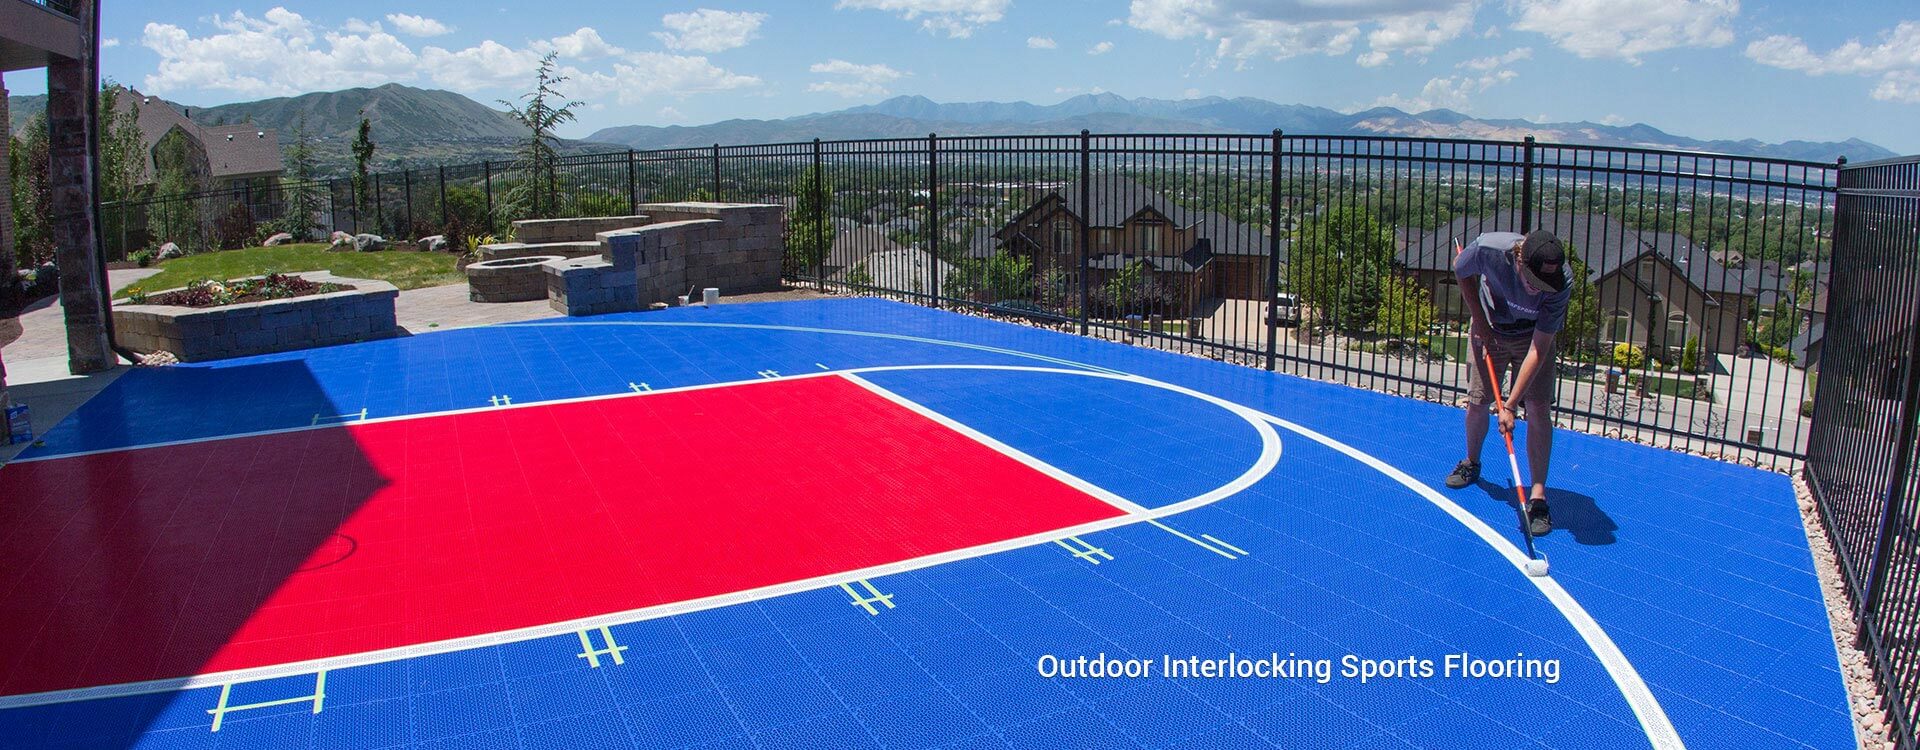 Outdoor Interlocking Sports Flooring